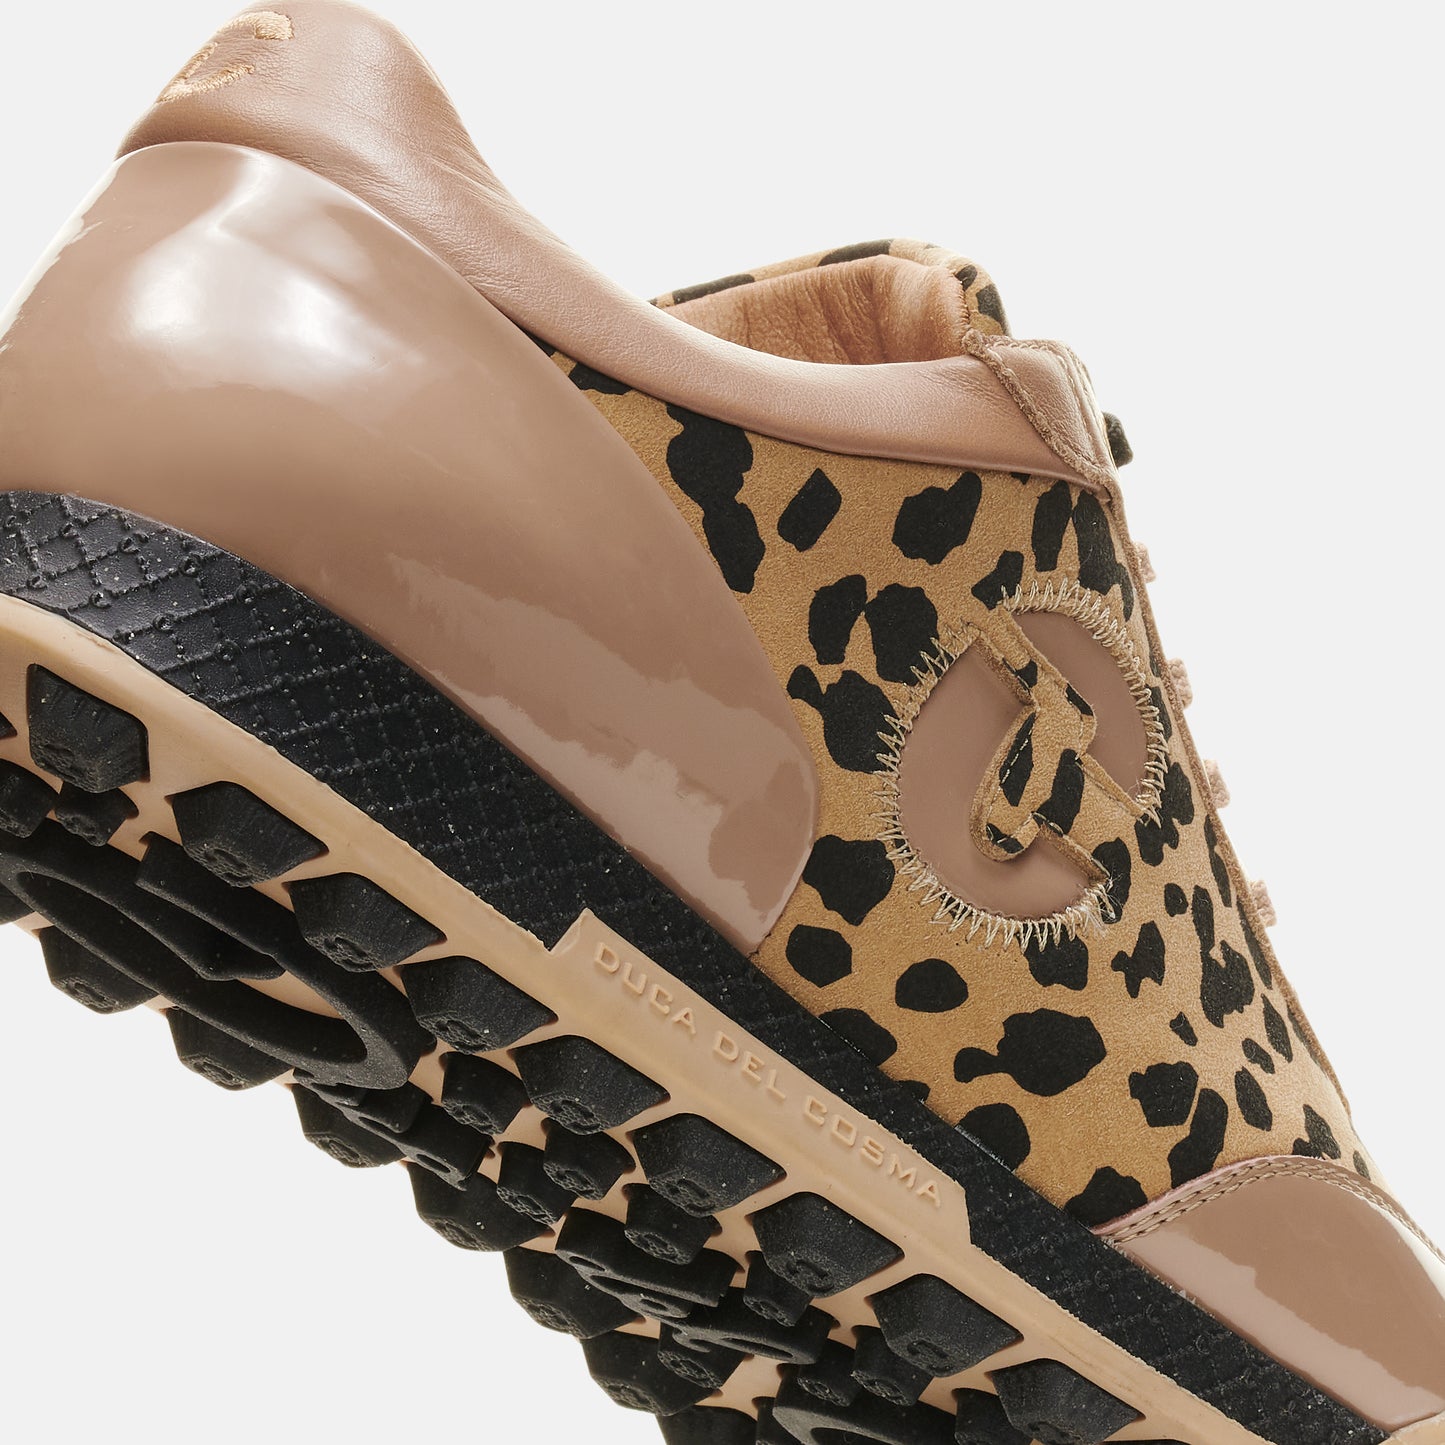 King Cheetah - Taupe Women's Golf Shoes